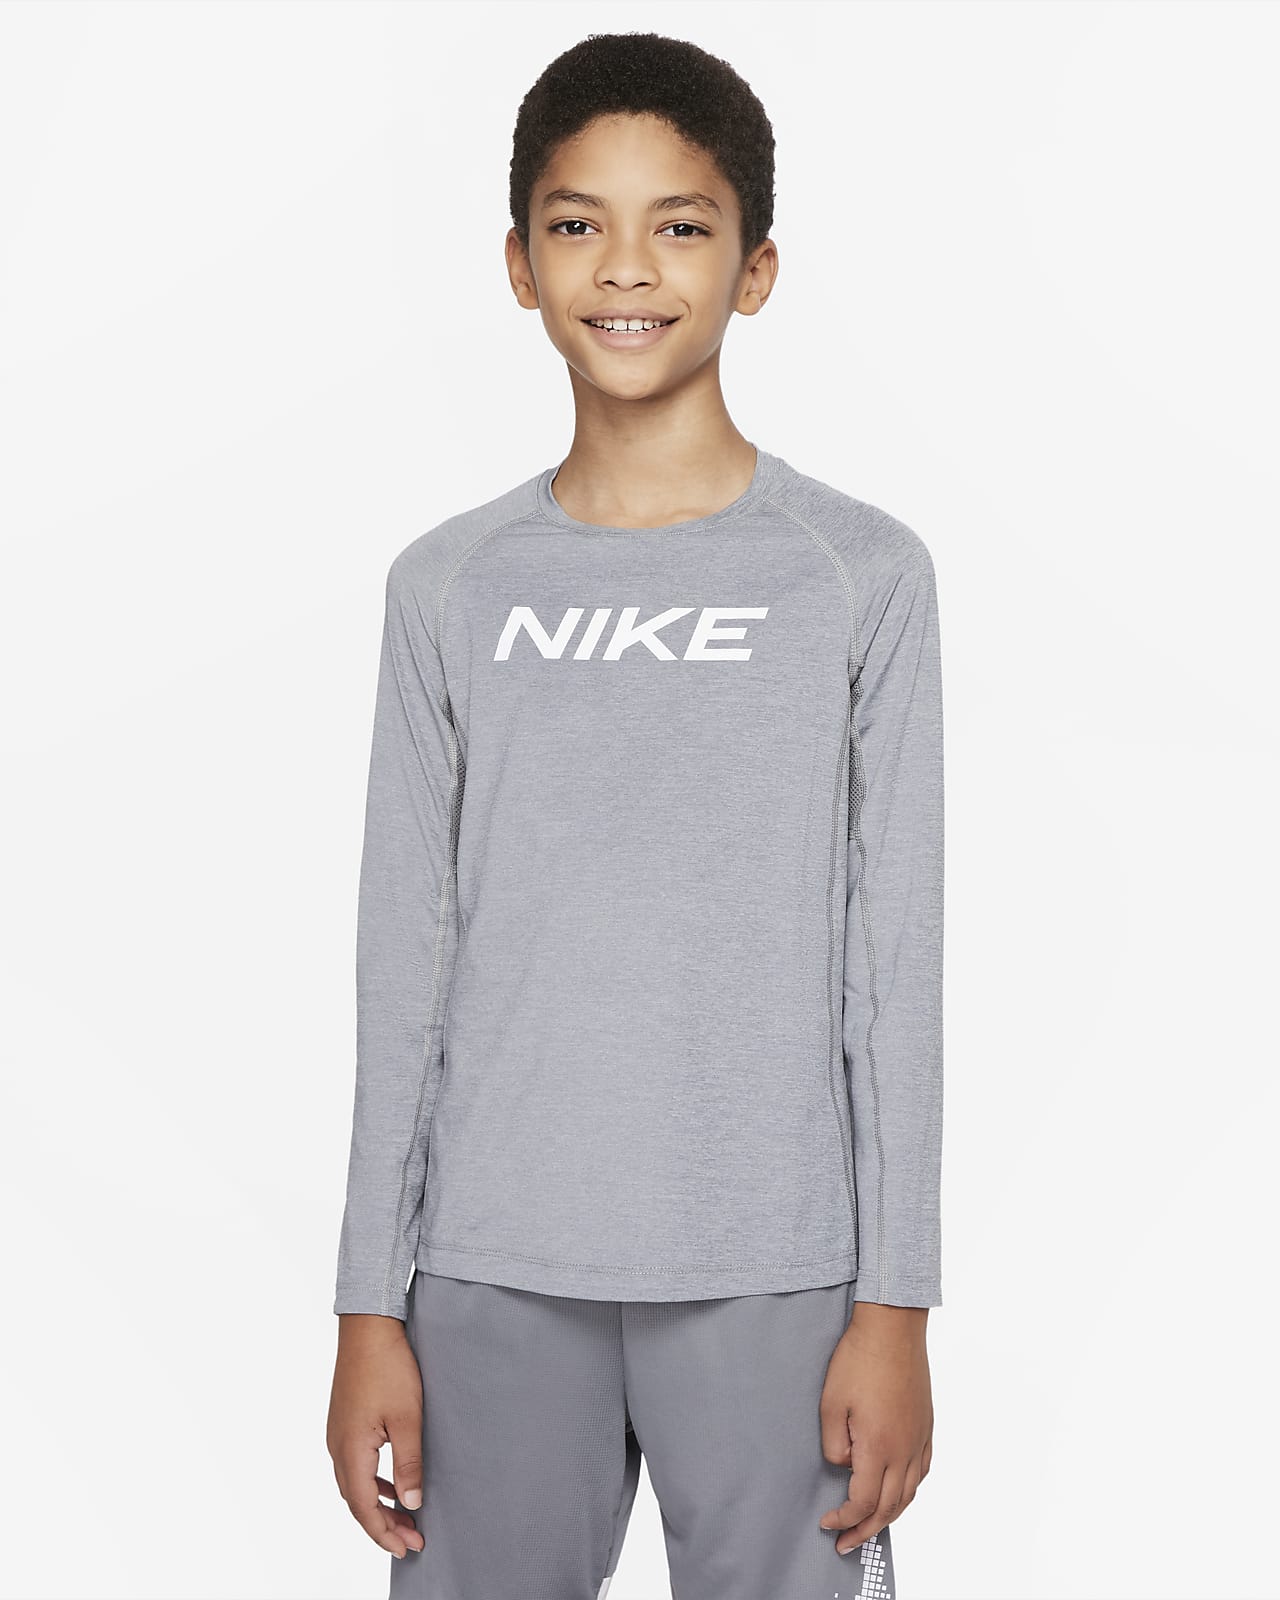 de manga larga para niño talla grande Pro Nike.com